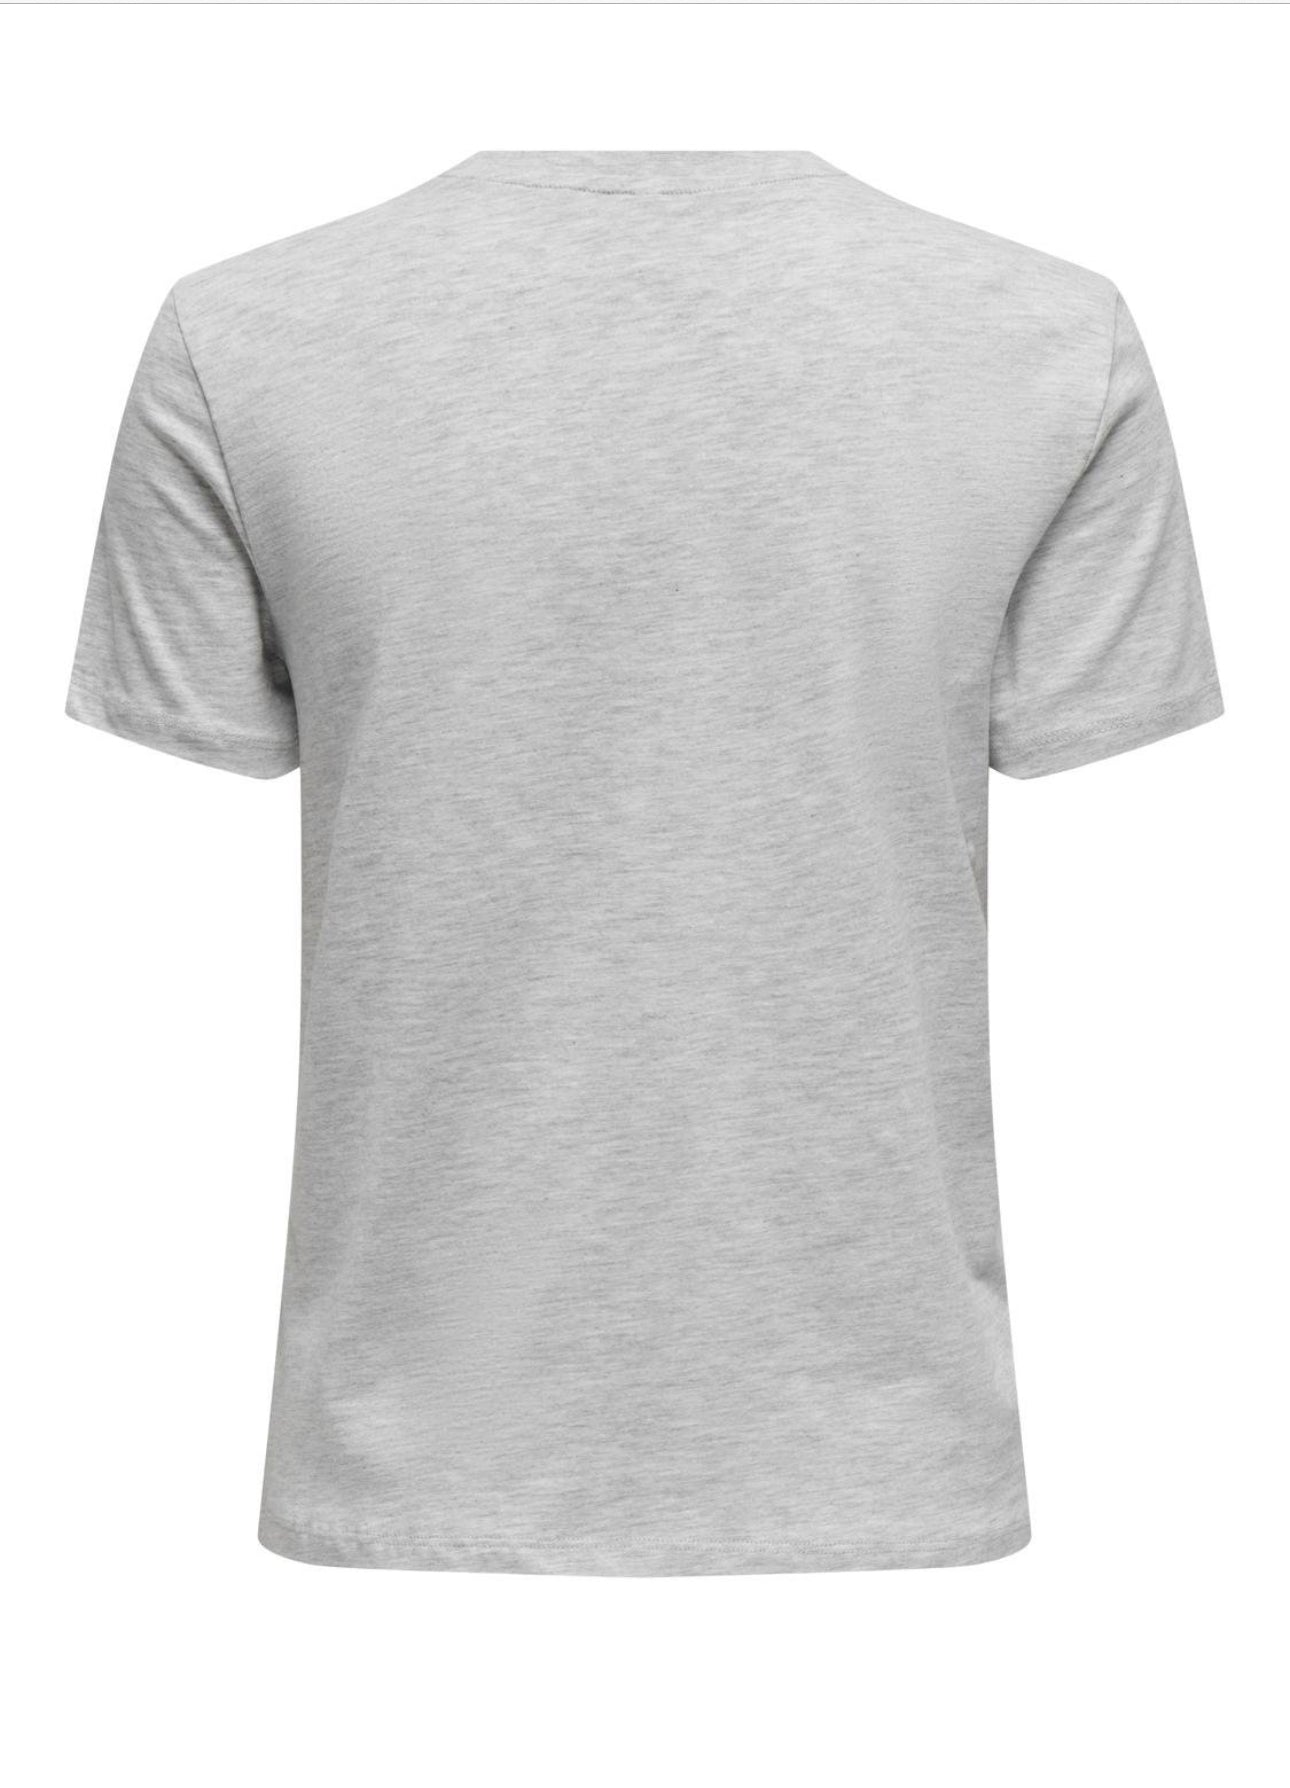 T-shirt olivia gris avec perles